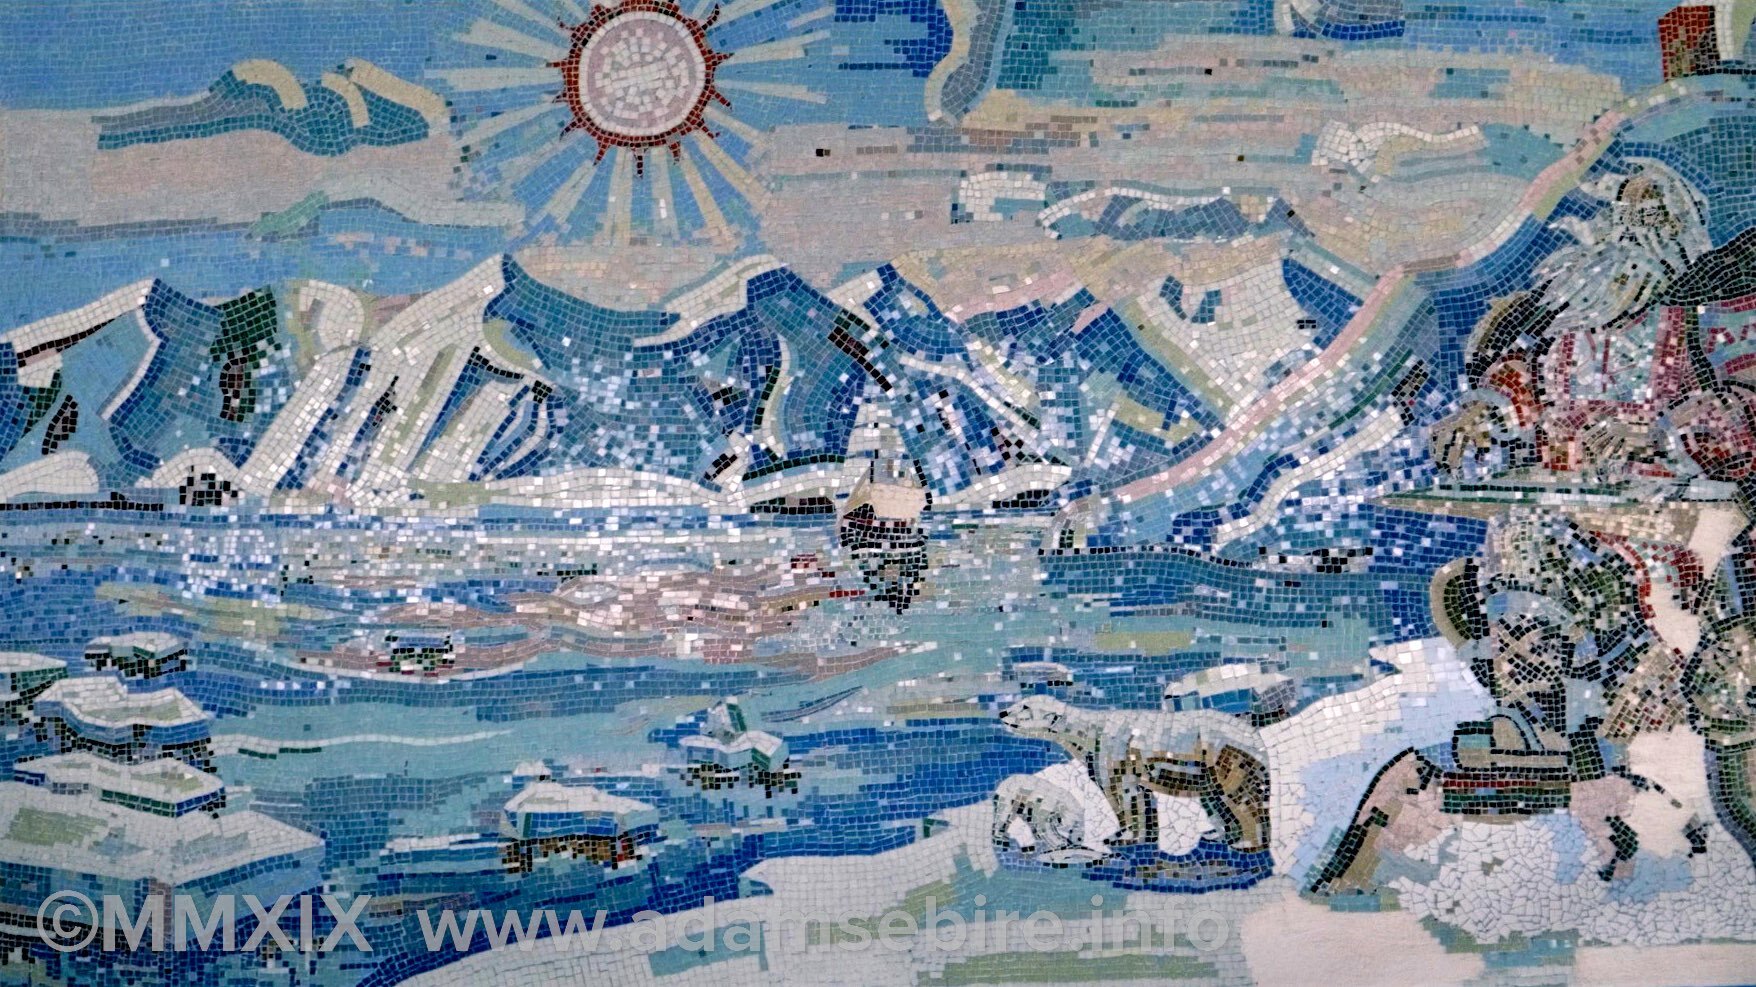 Pyramiden Russian North Pole Coal Mine mosaic mural.jpg